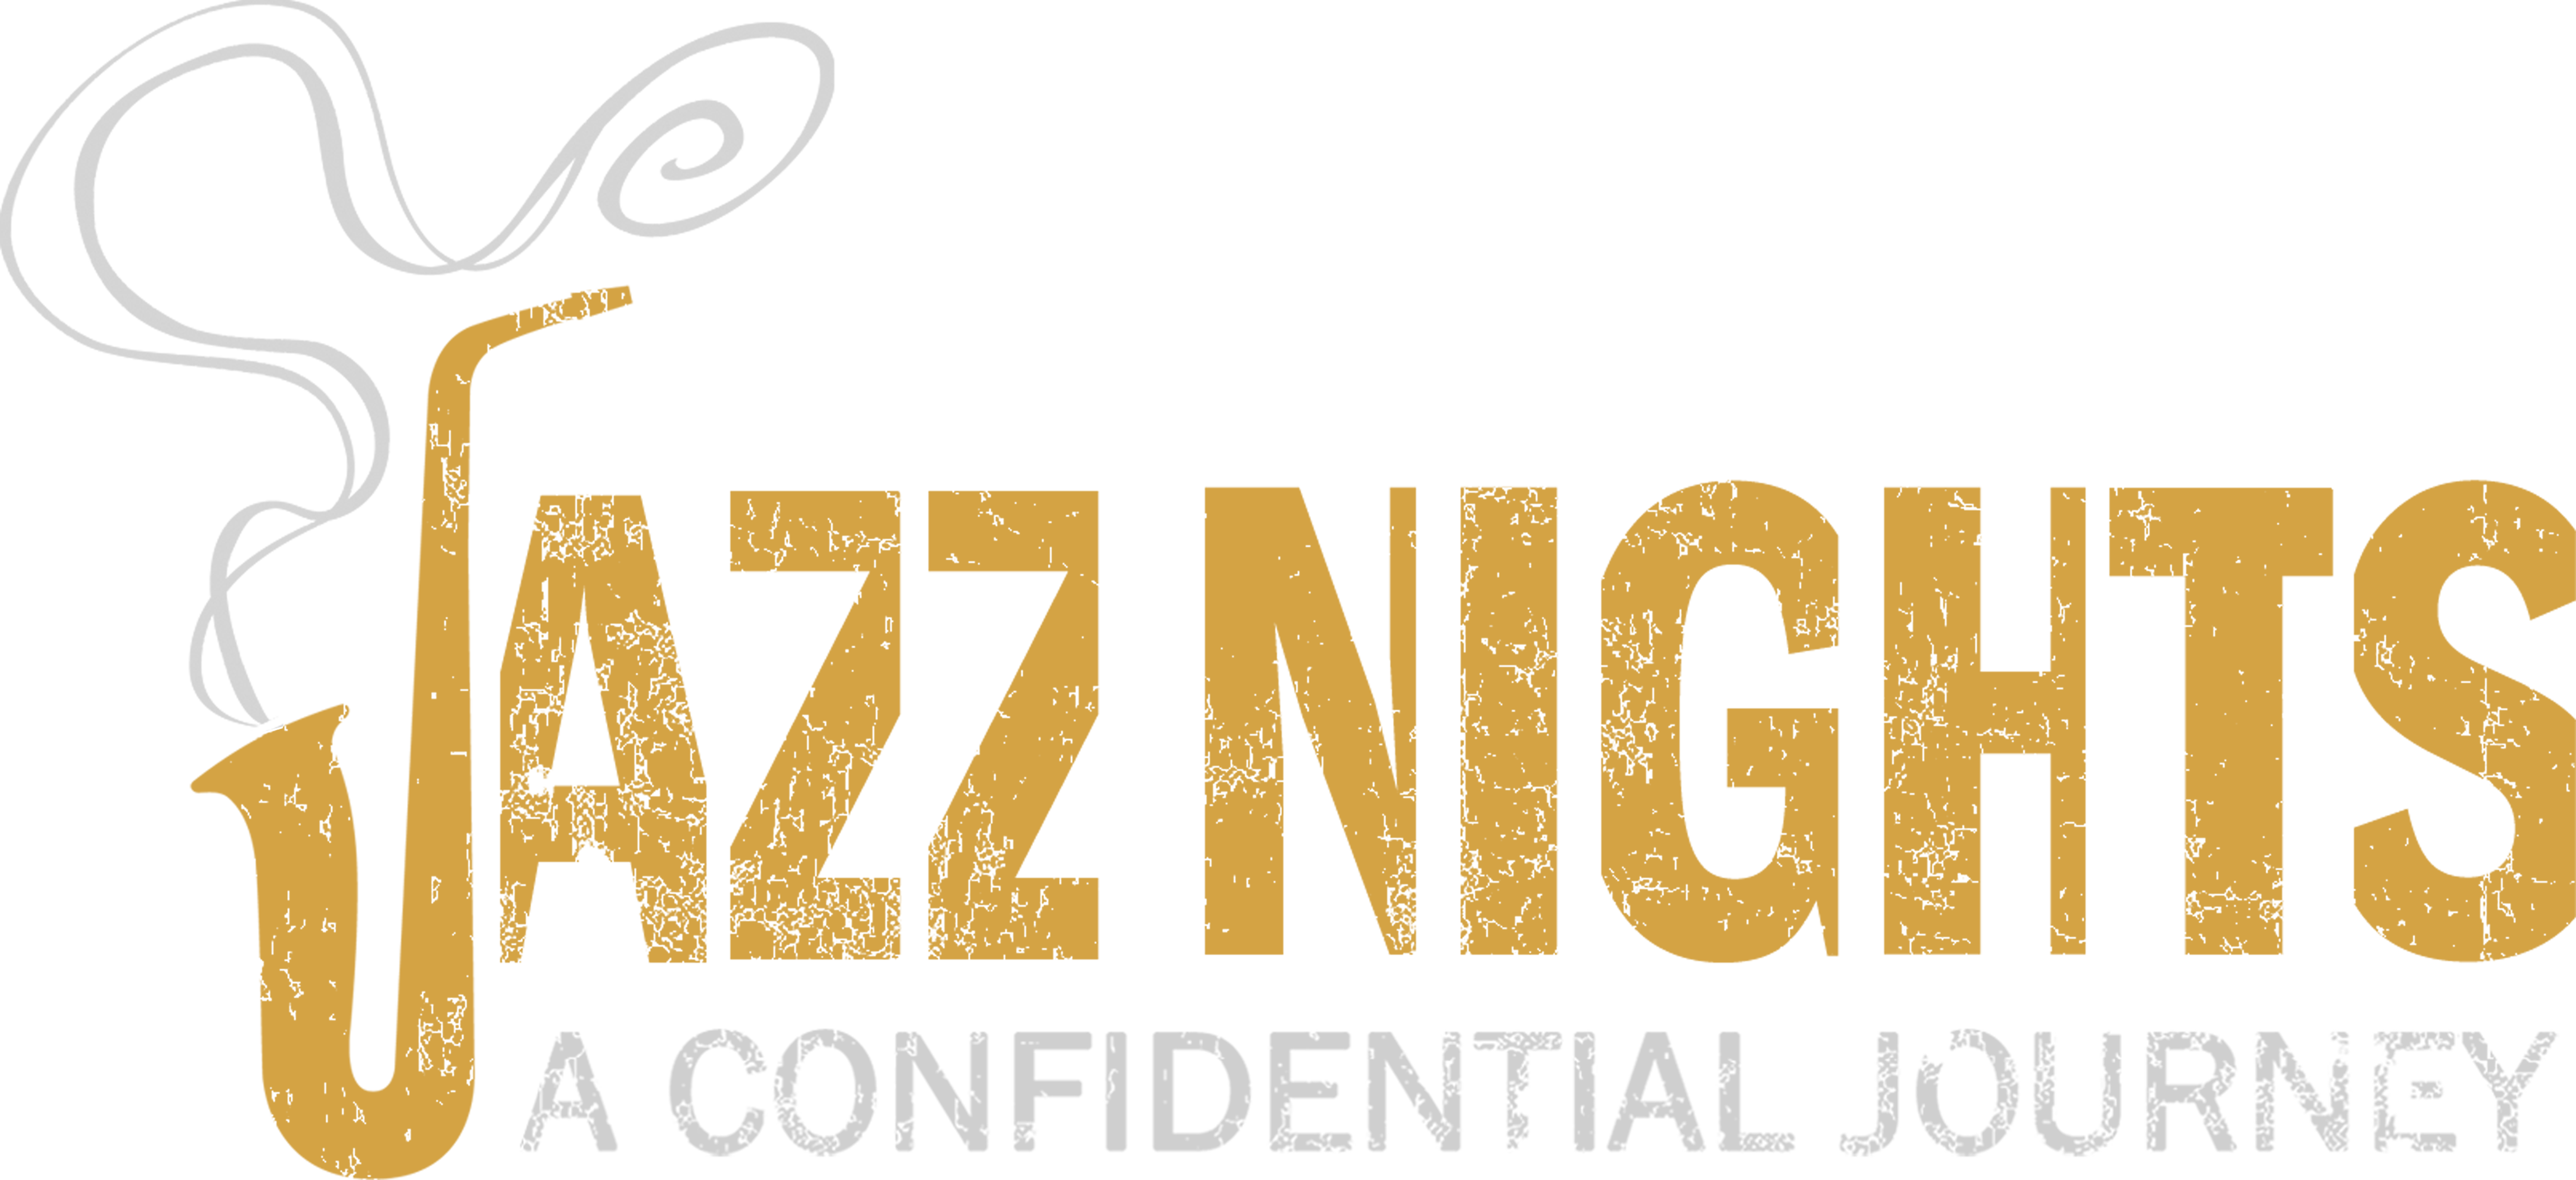 JAZZ NIGHTS: A CONFIDENTIAL JOURNEY